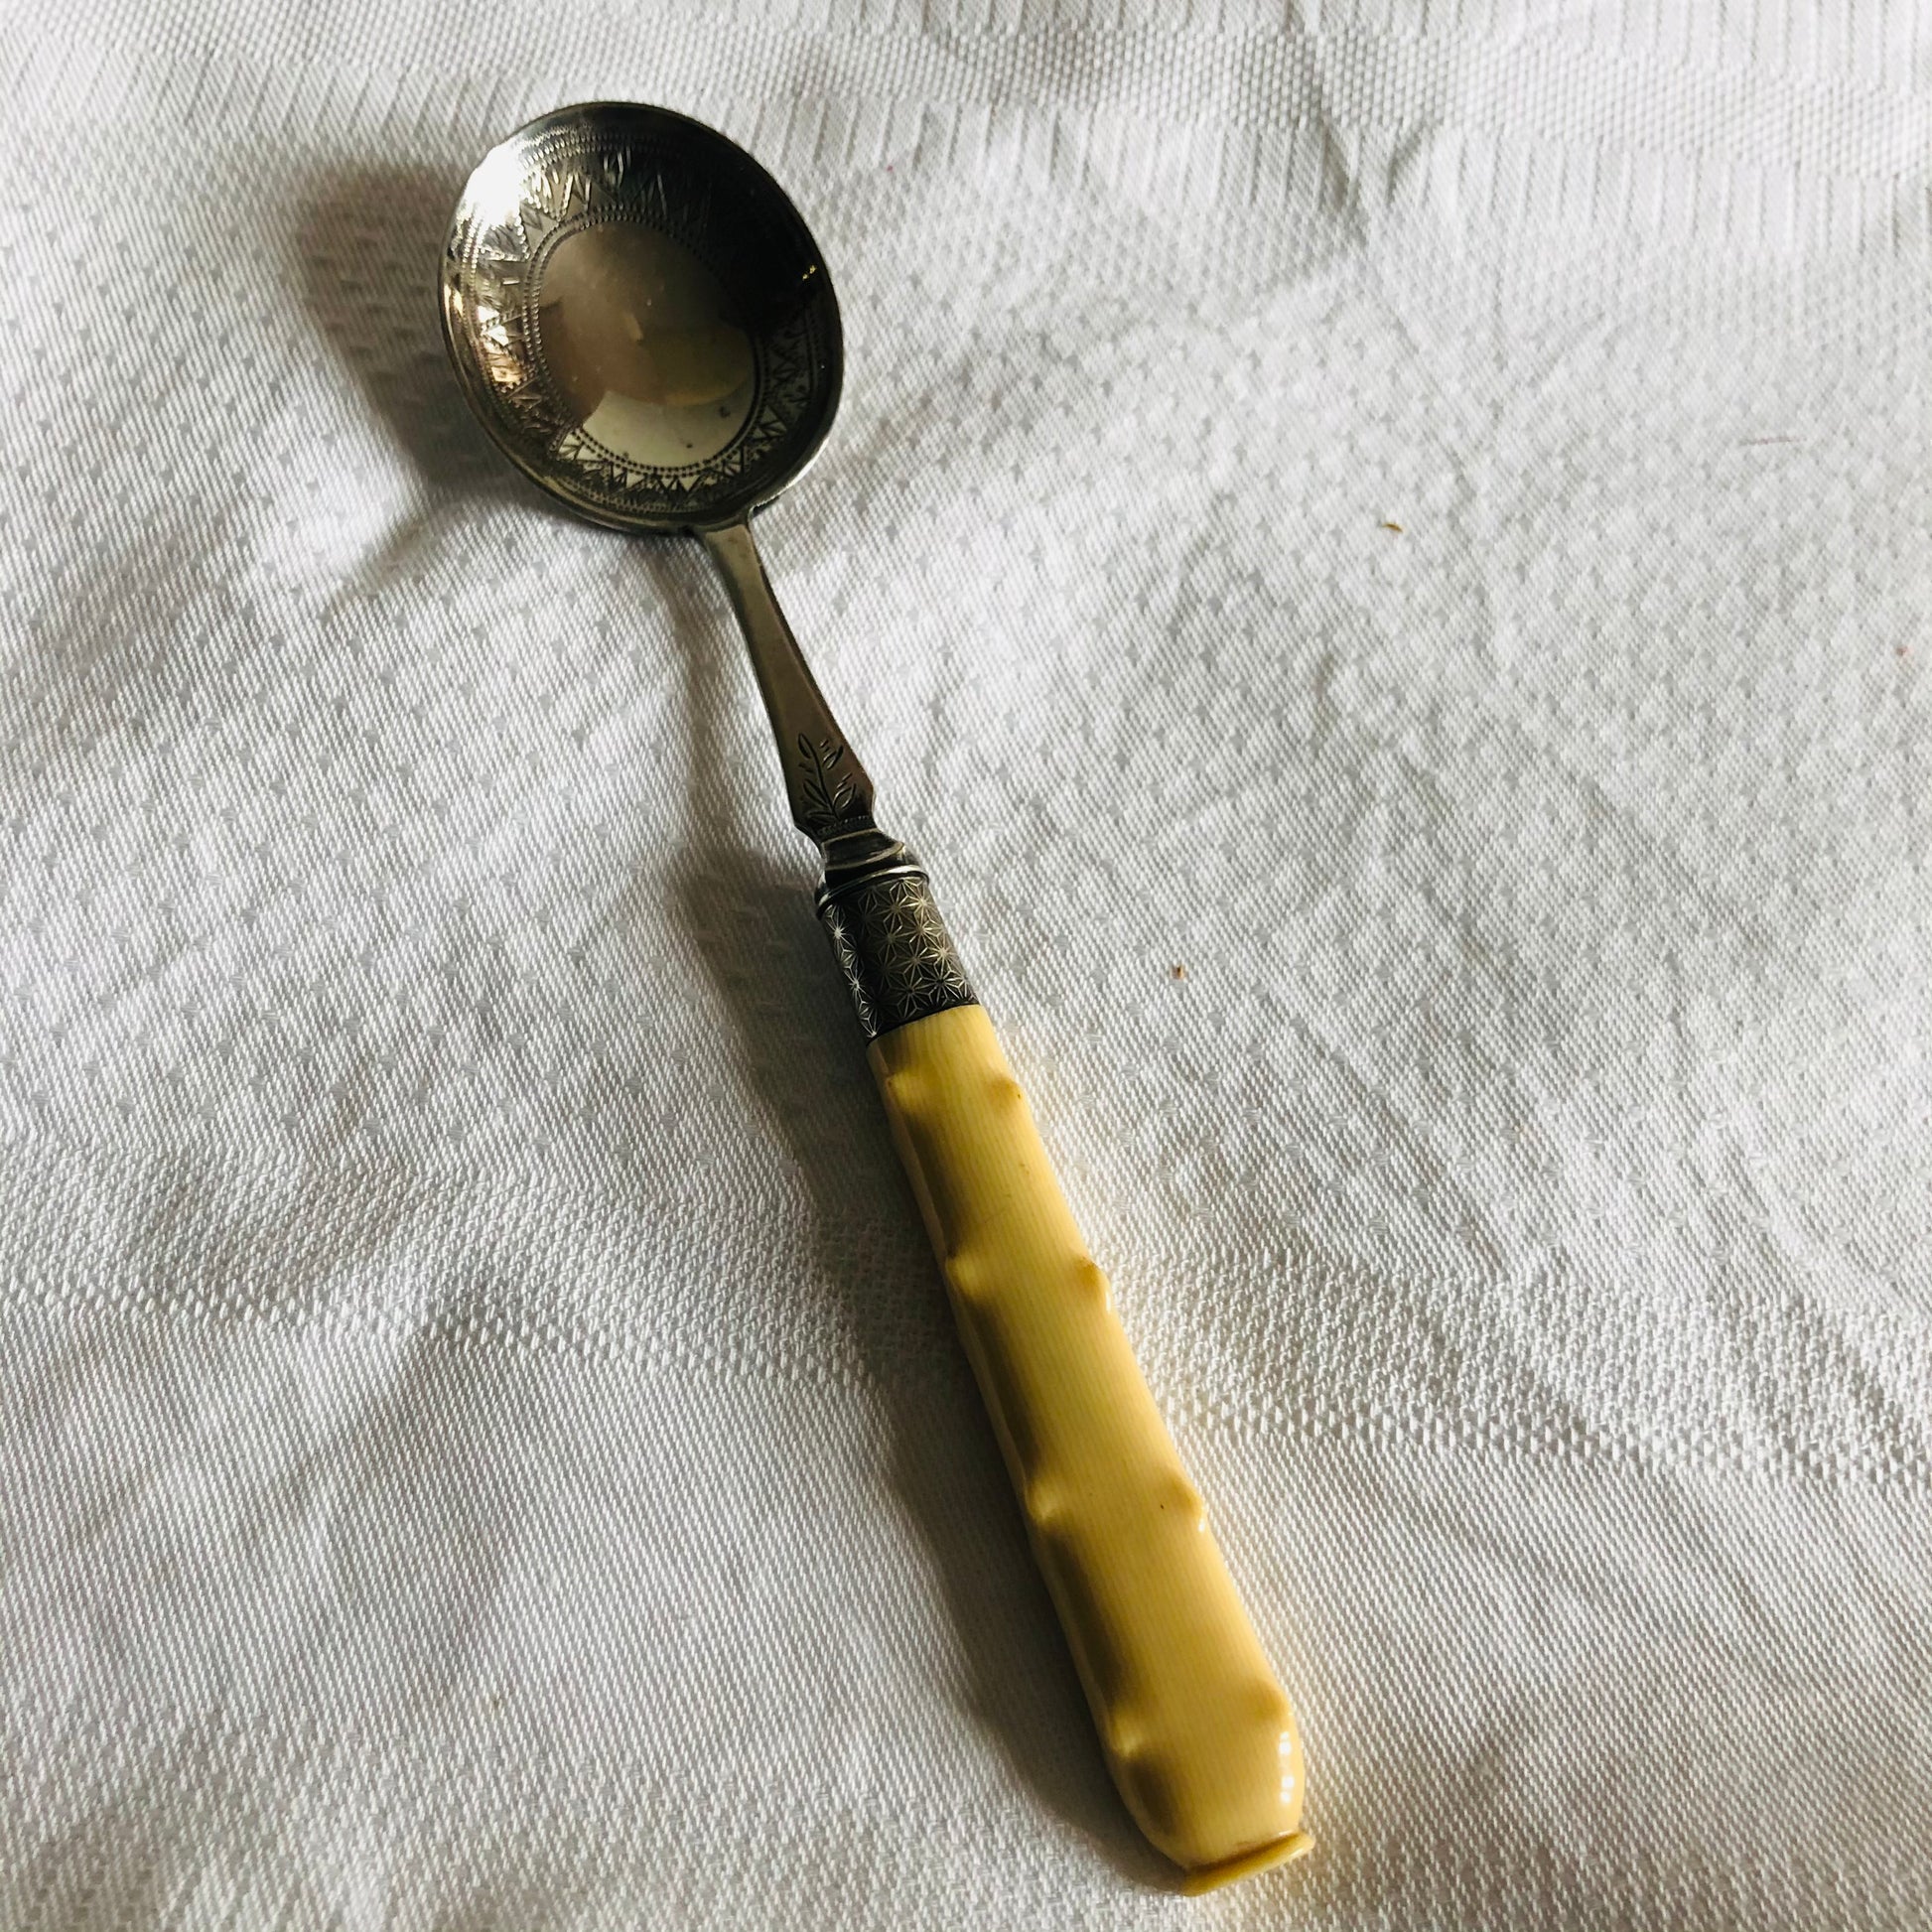 Antique Silver Spoon with Bone Handle